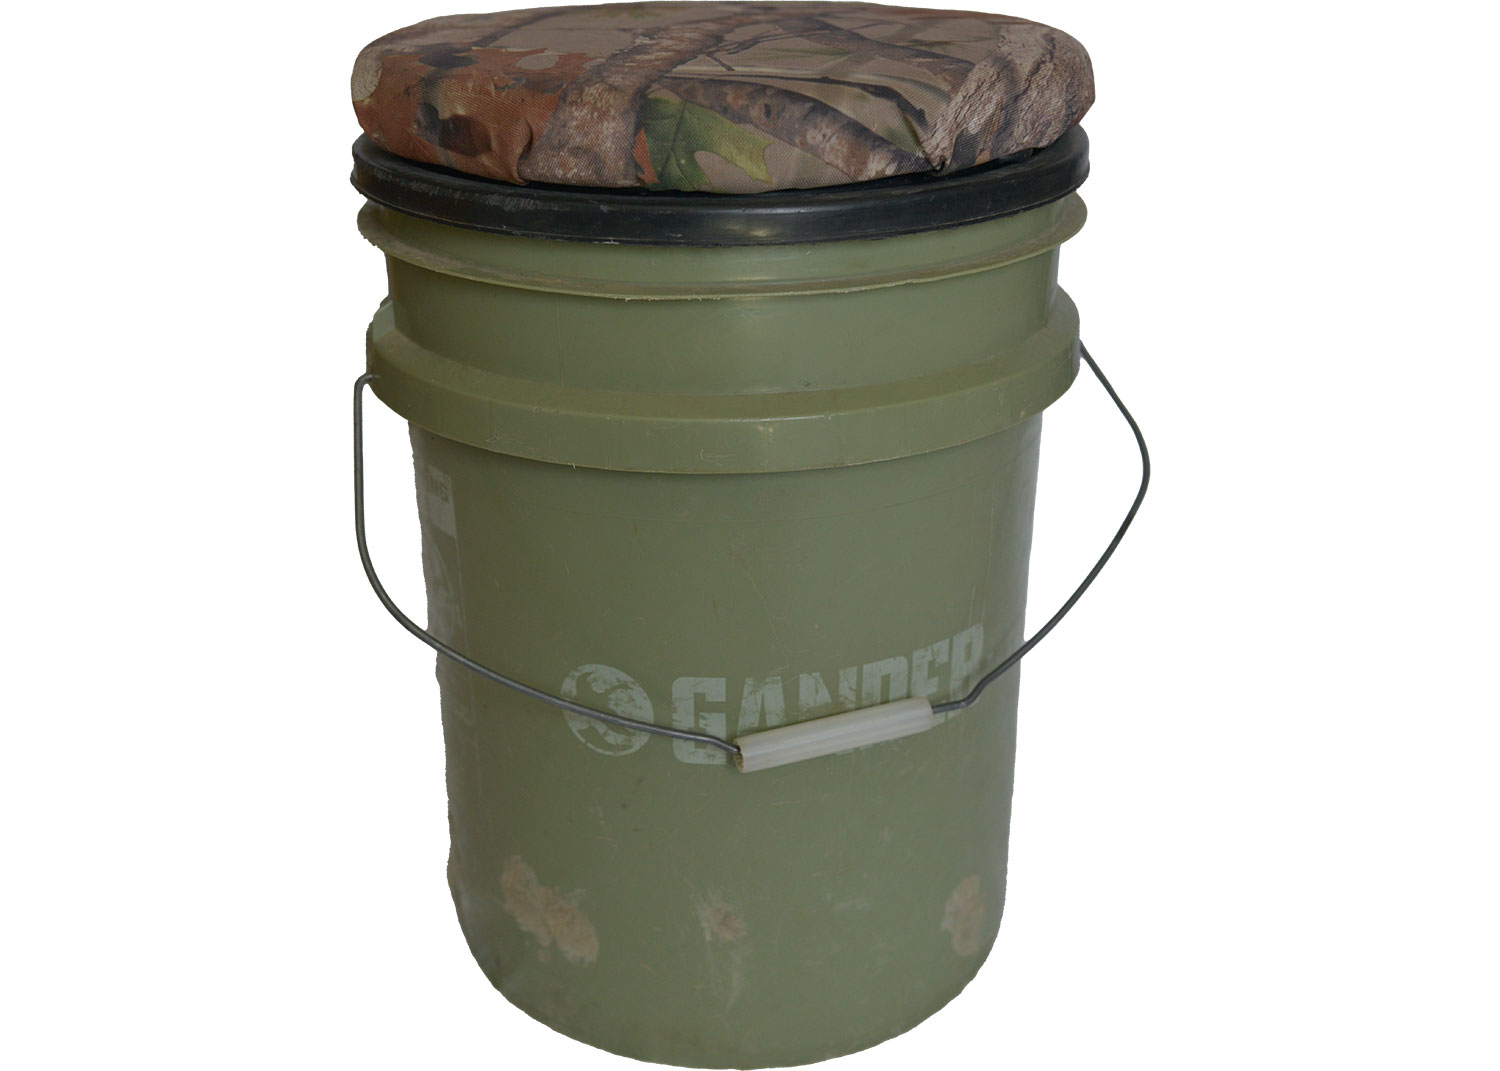 Example bucket